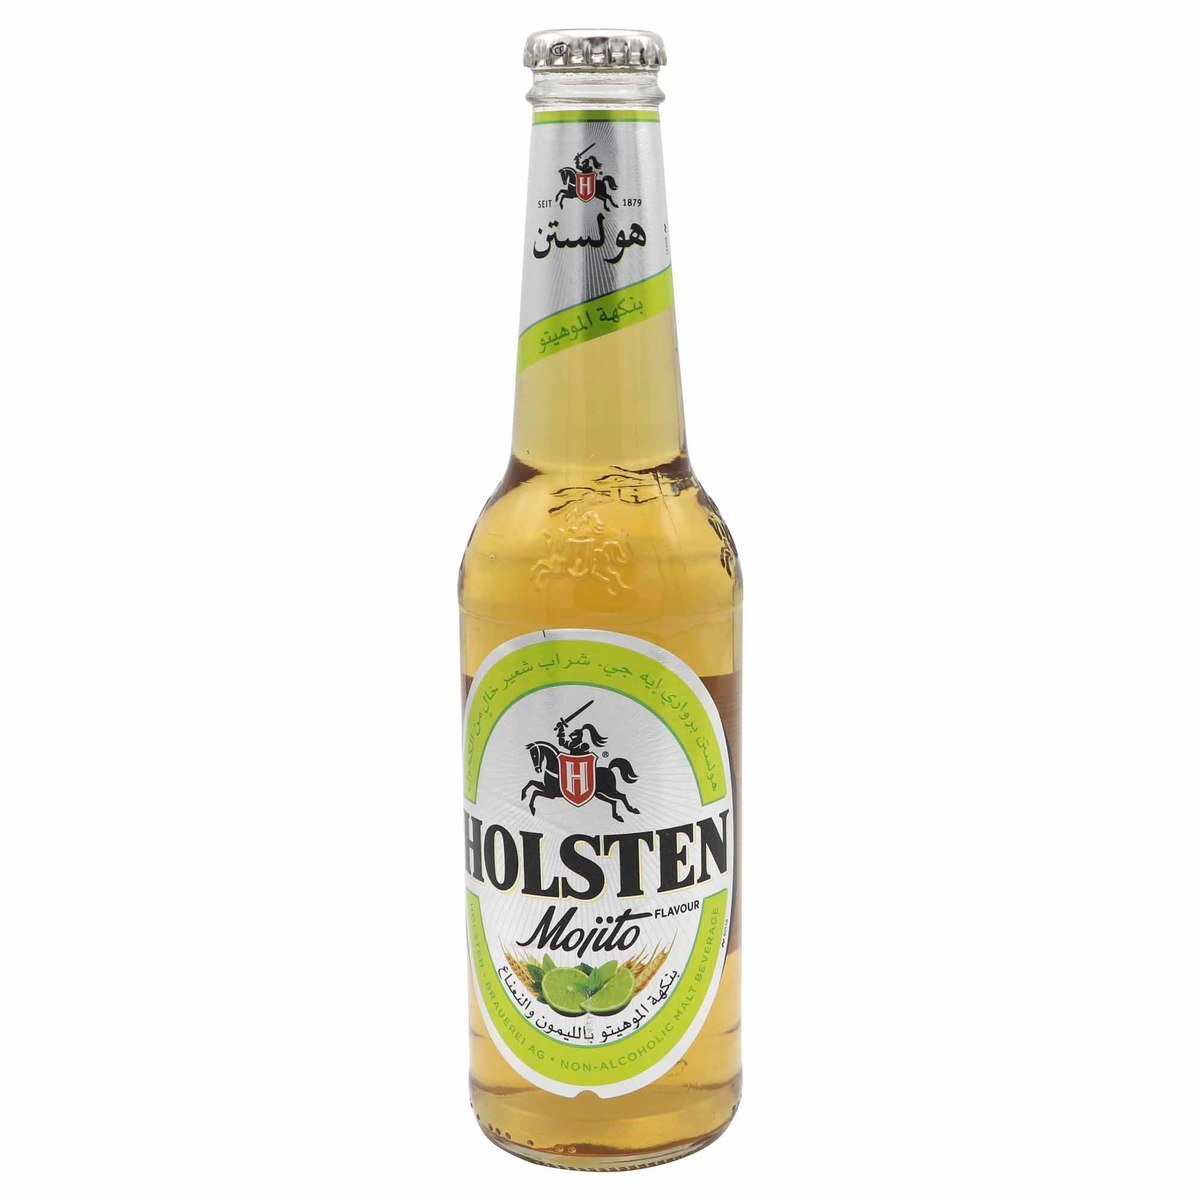 Holsten Mojito Non Alcoholic Malt Beverage 6 x 330 ml